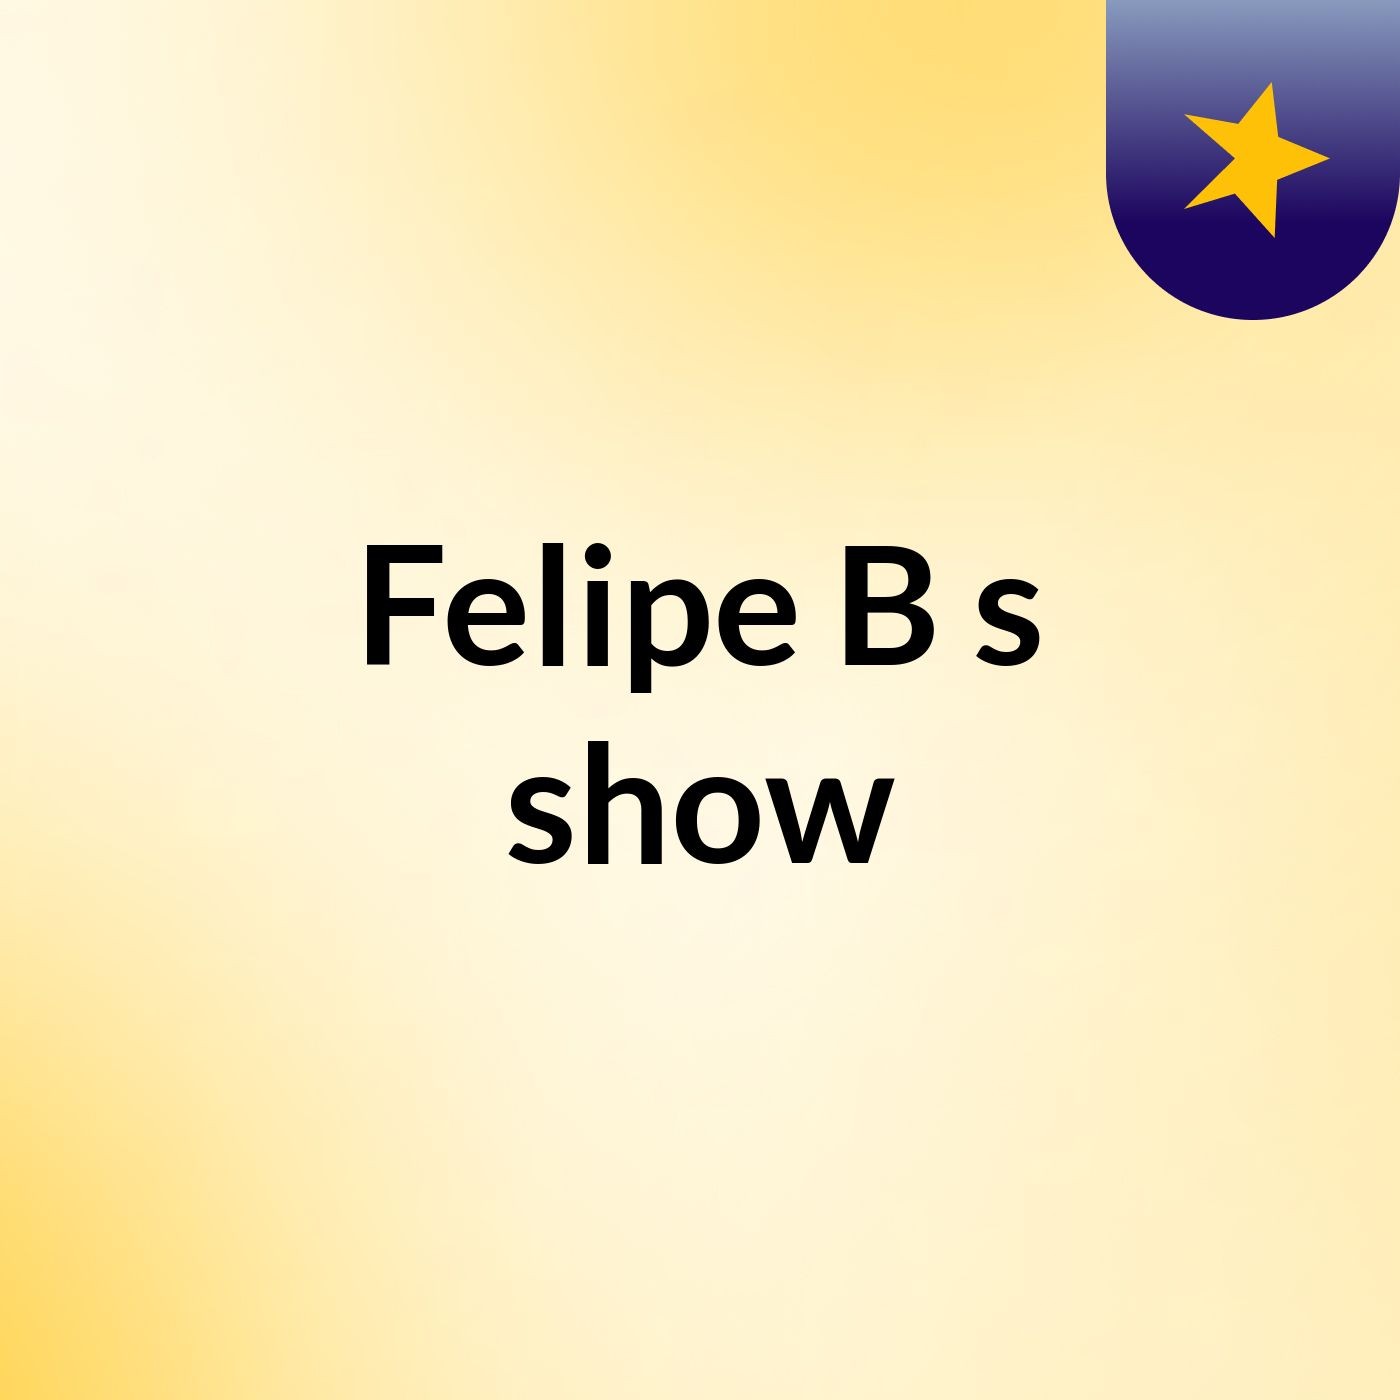 Felipe B's show